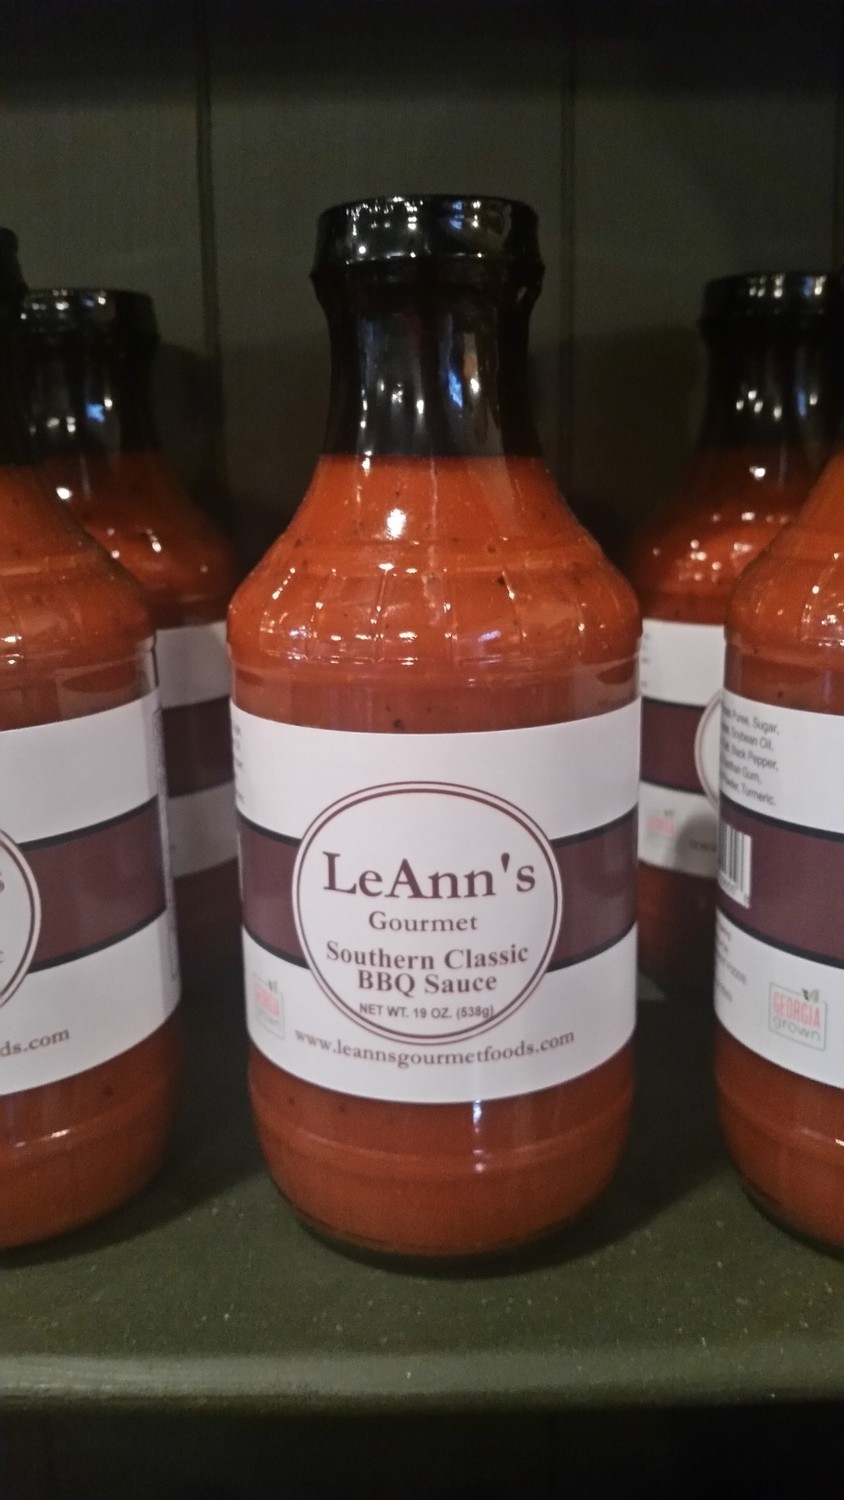 LeAnn's Gourmet Southern Classic BBQ Sauce